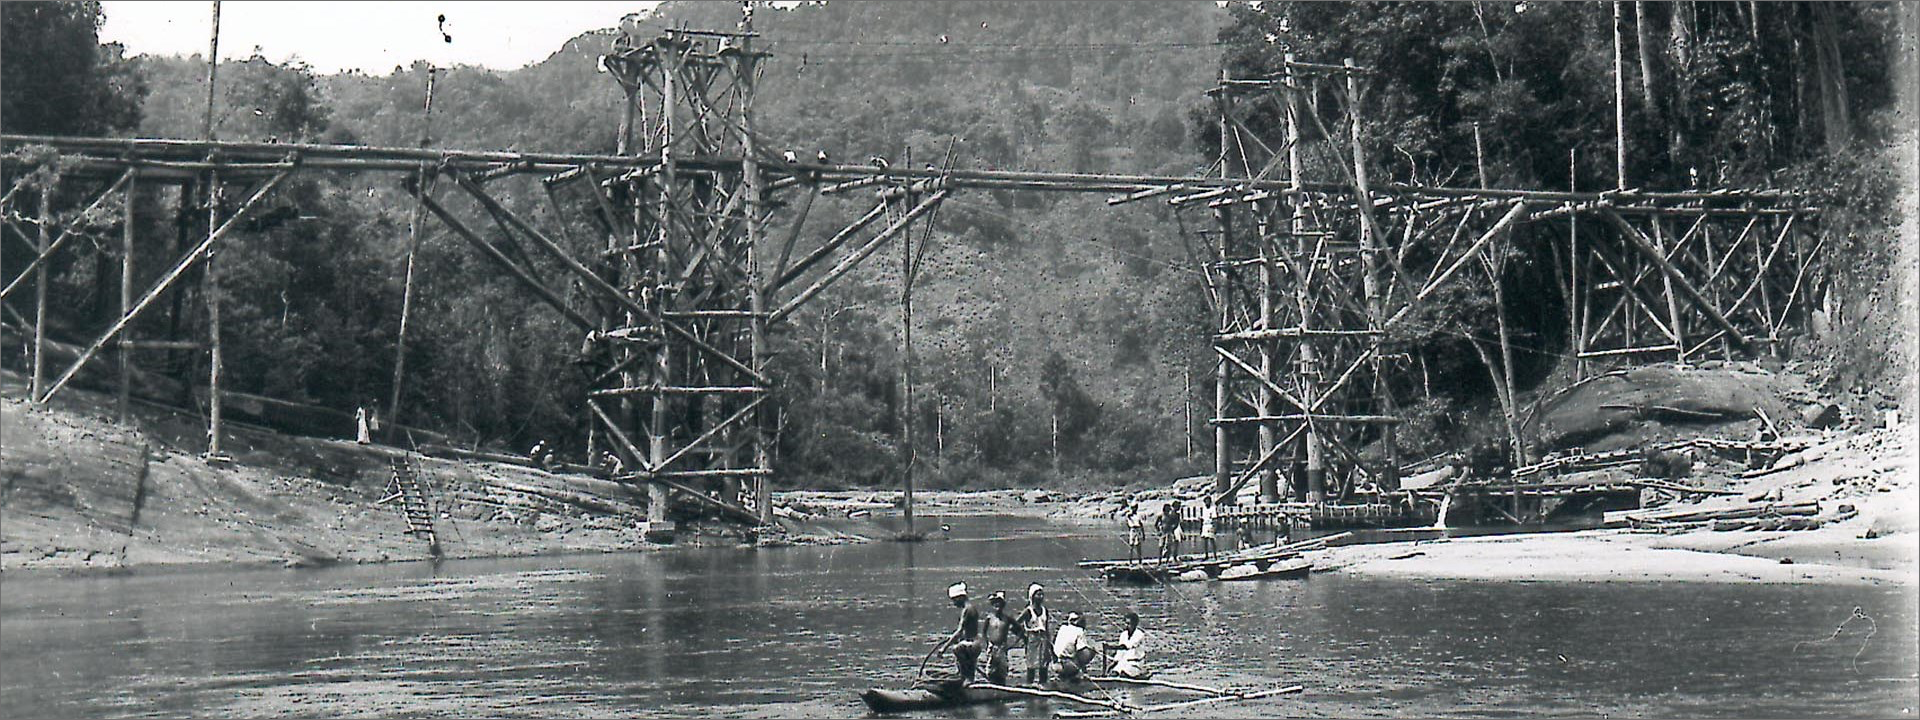 Bridge on the River, Kwai